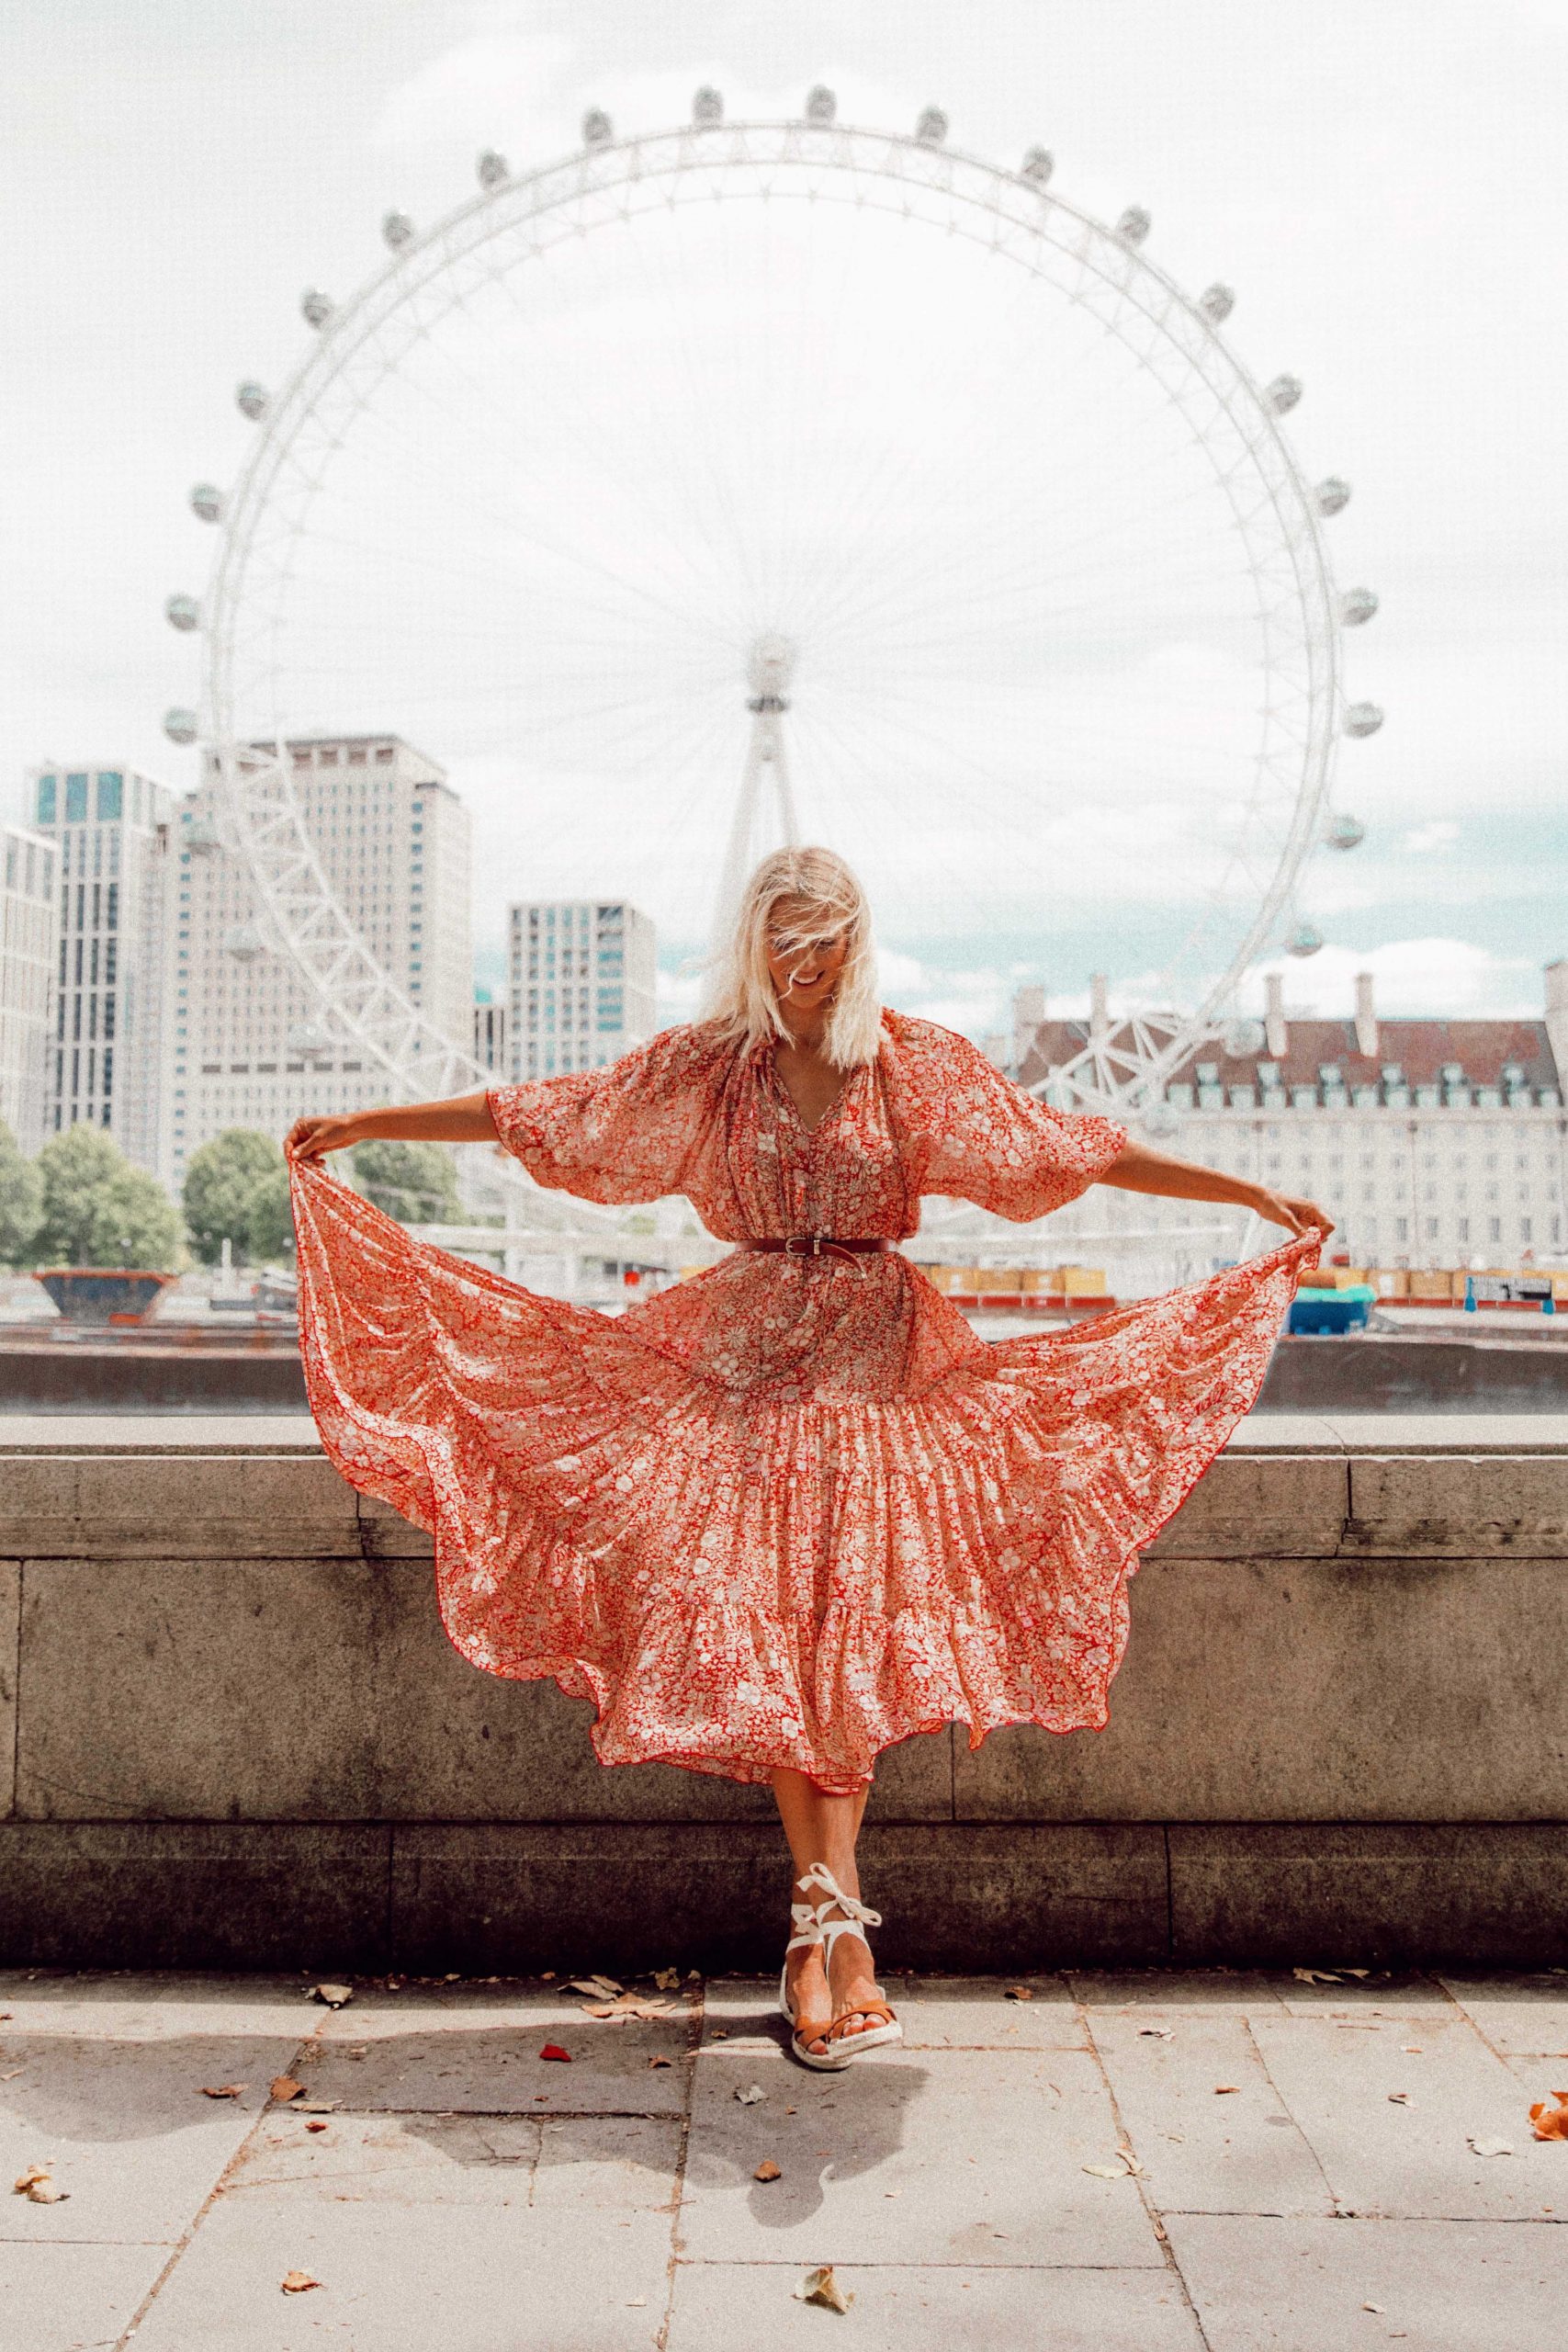 London Fashion Photoshoot with Zanna Van Dijk